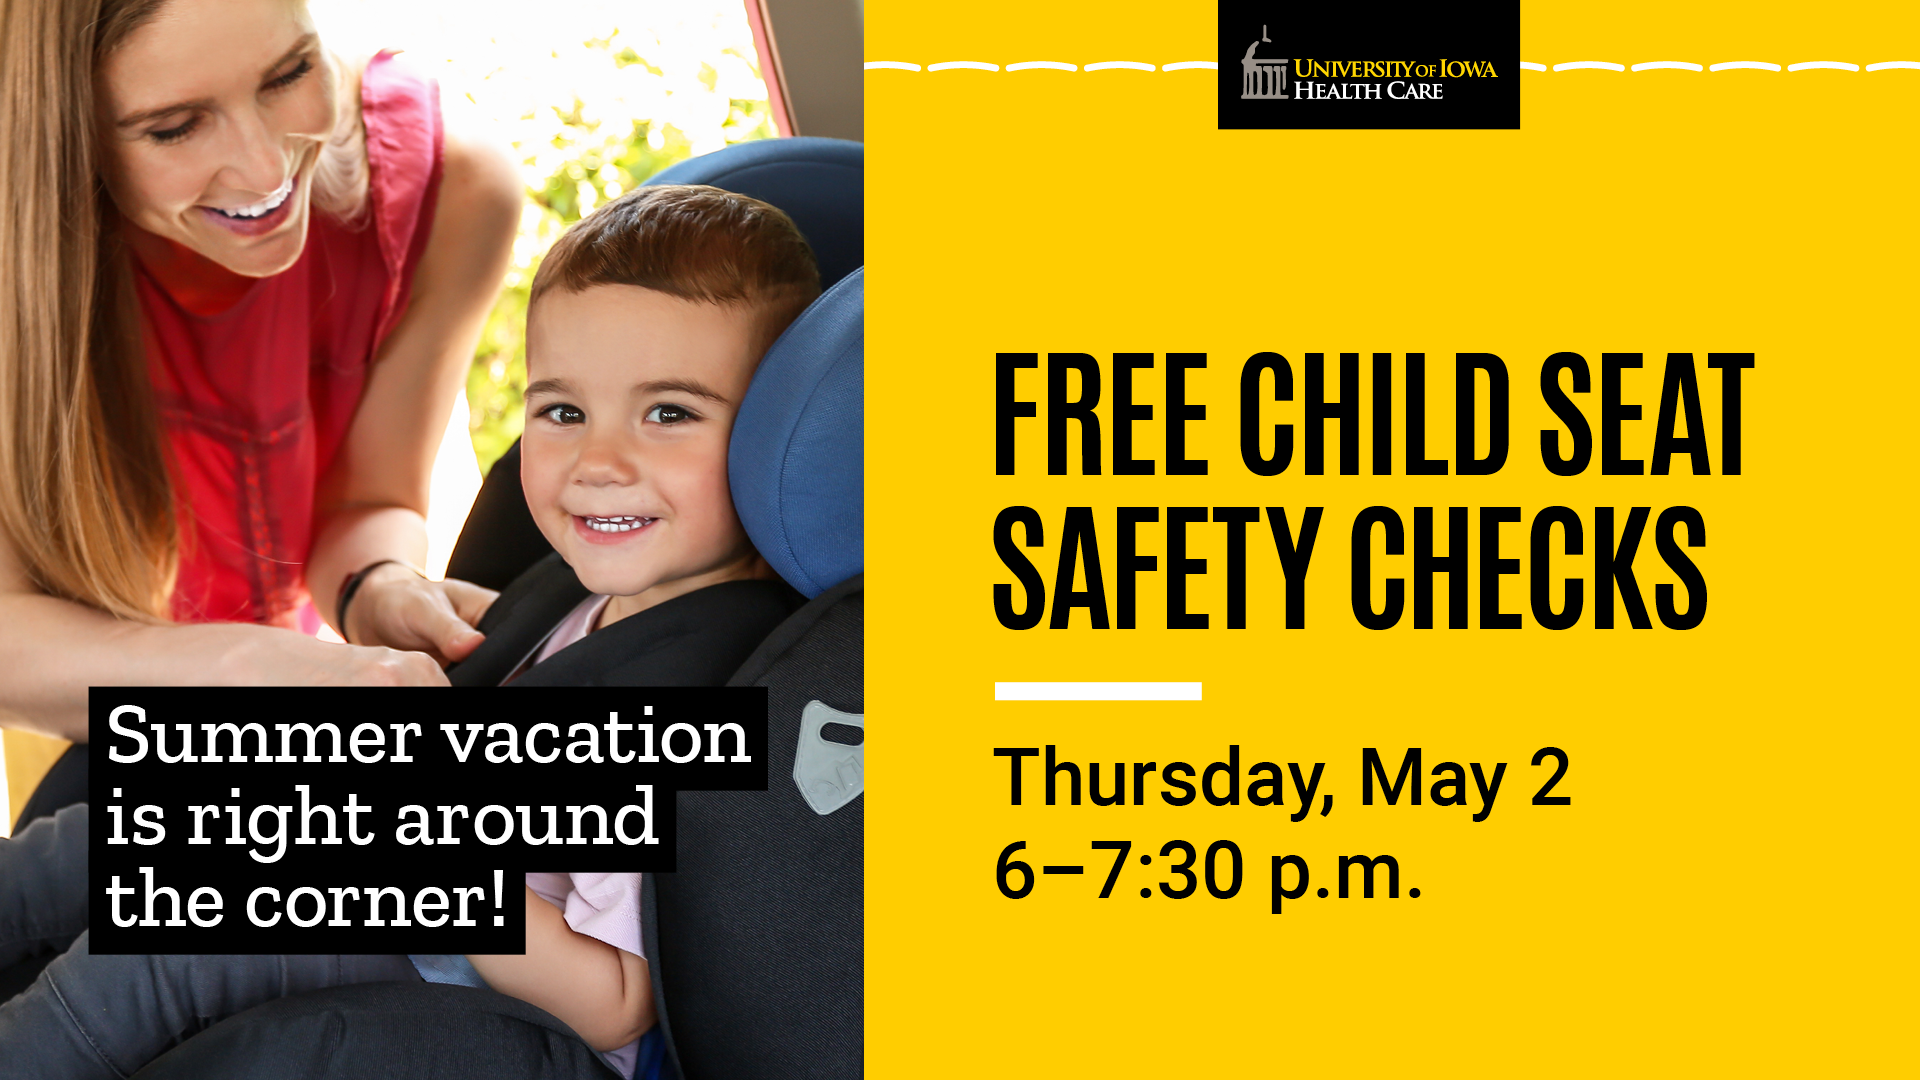 Child Seat Safety Checks Promotion Image